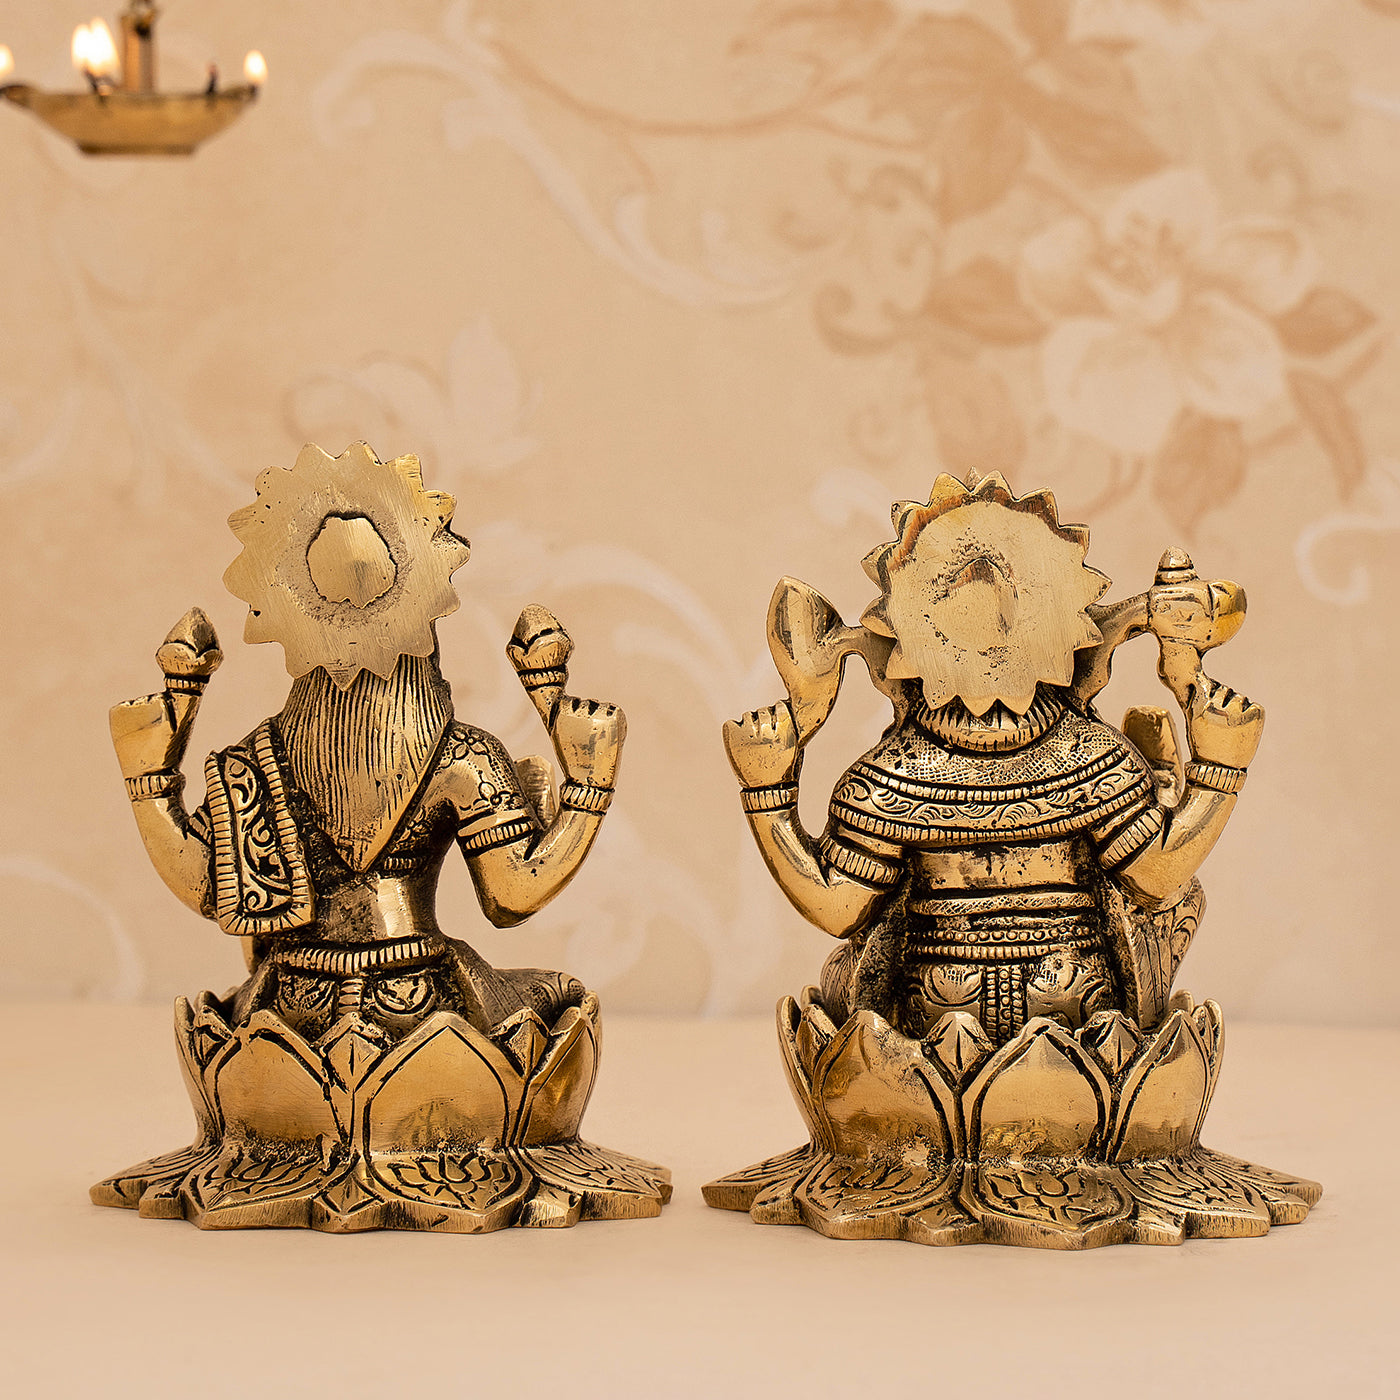 Brass Handcrafted Ganesh And Lakshmi Idol/Statue Set